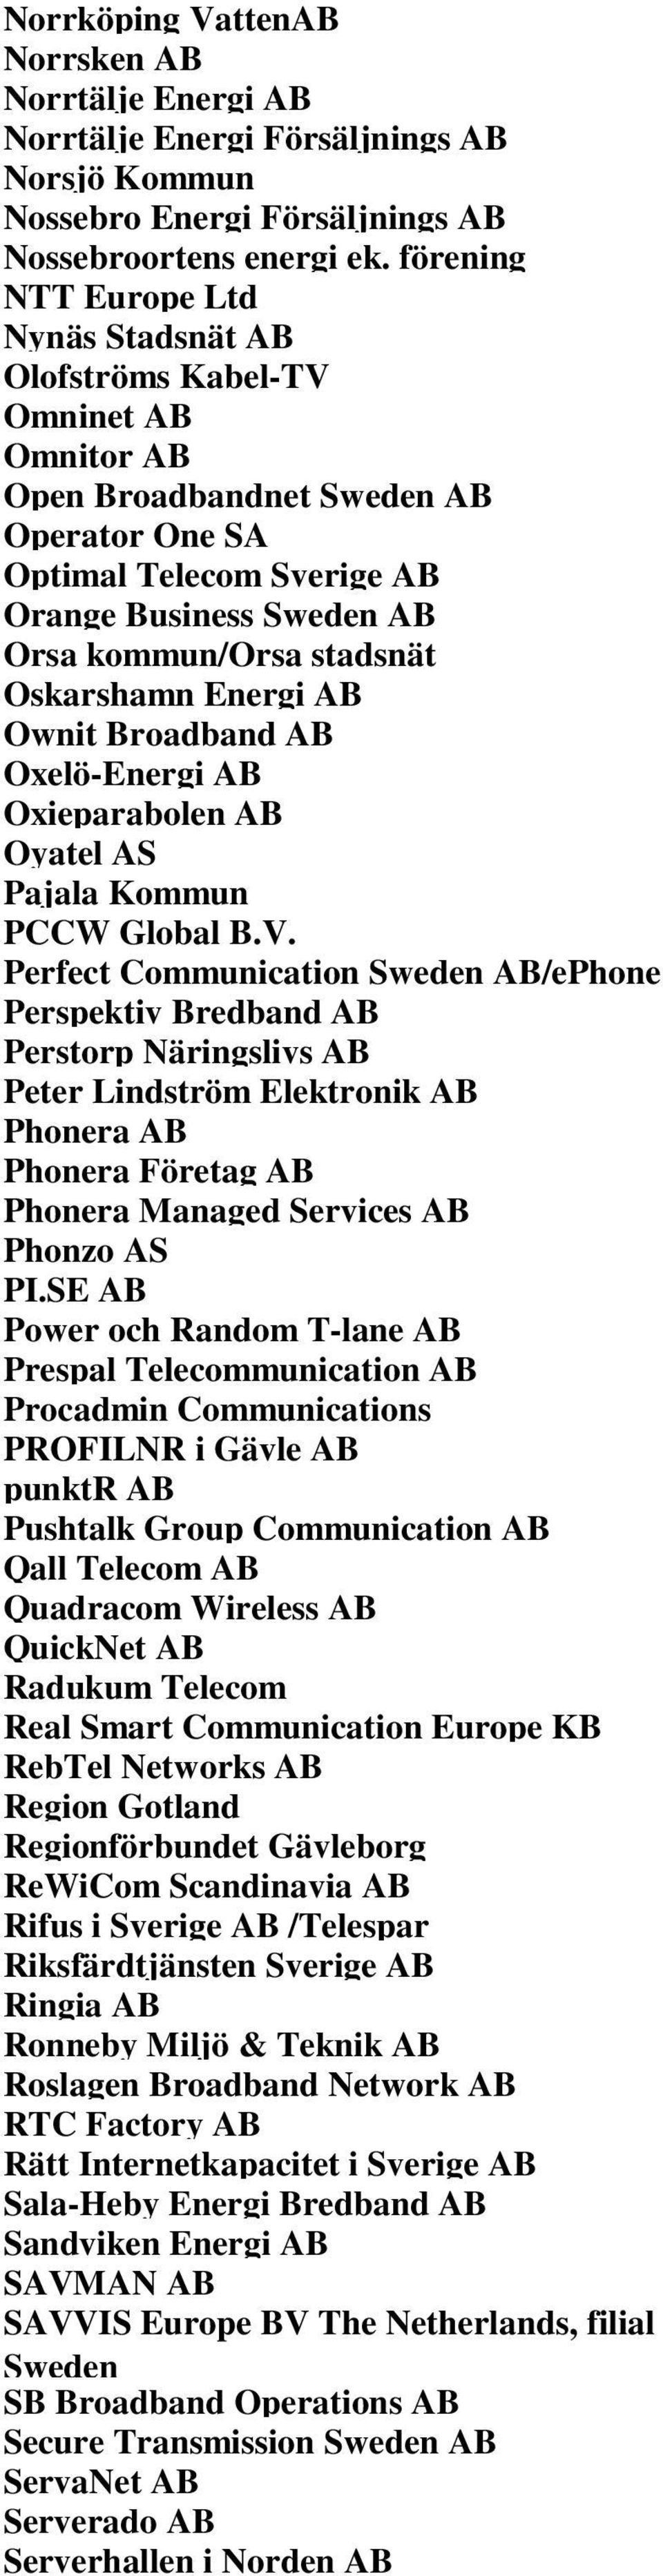 stadsnät Oskarshamn Energi AB Ownit Broadband AB Oxelö-Energi AB Oxieparabolen AB Oyatel AS Pajala Kommun PCCW Global B.V.